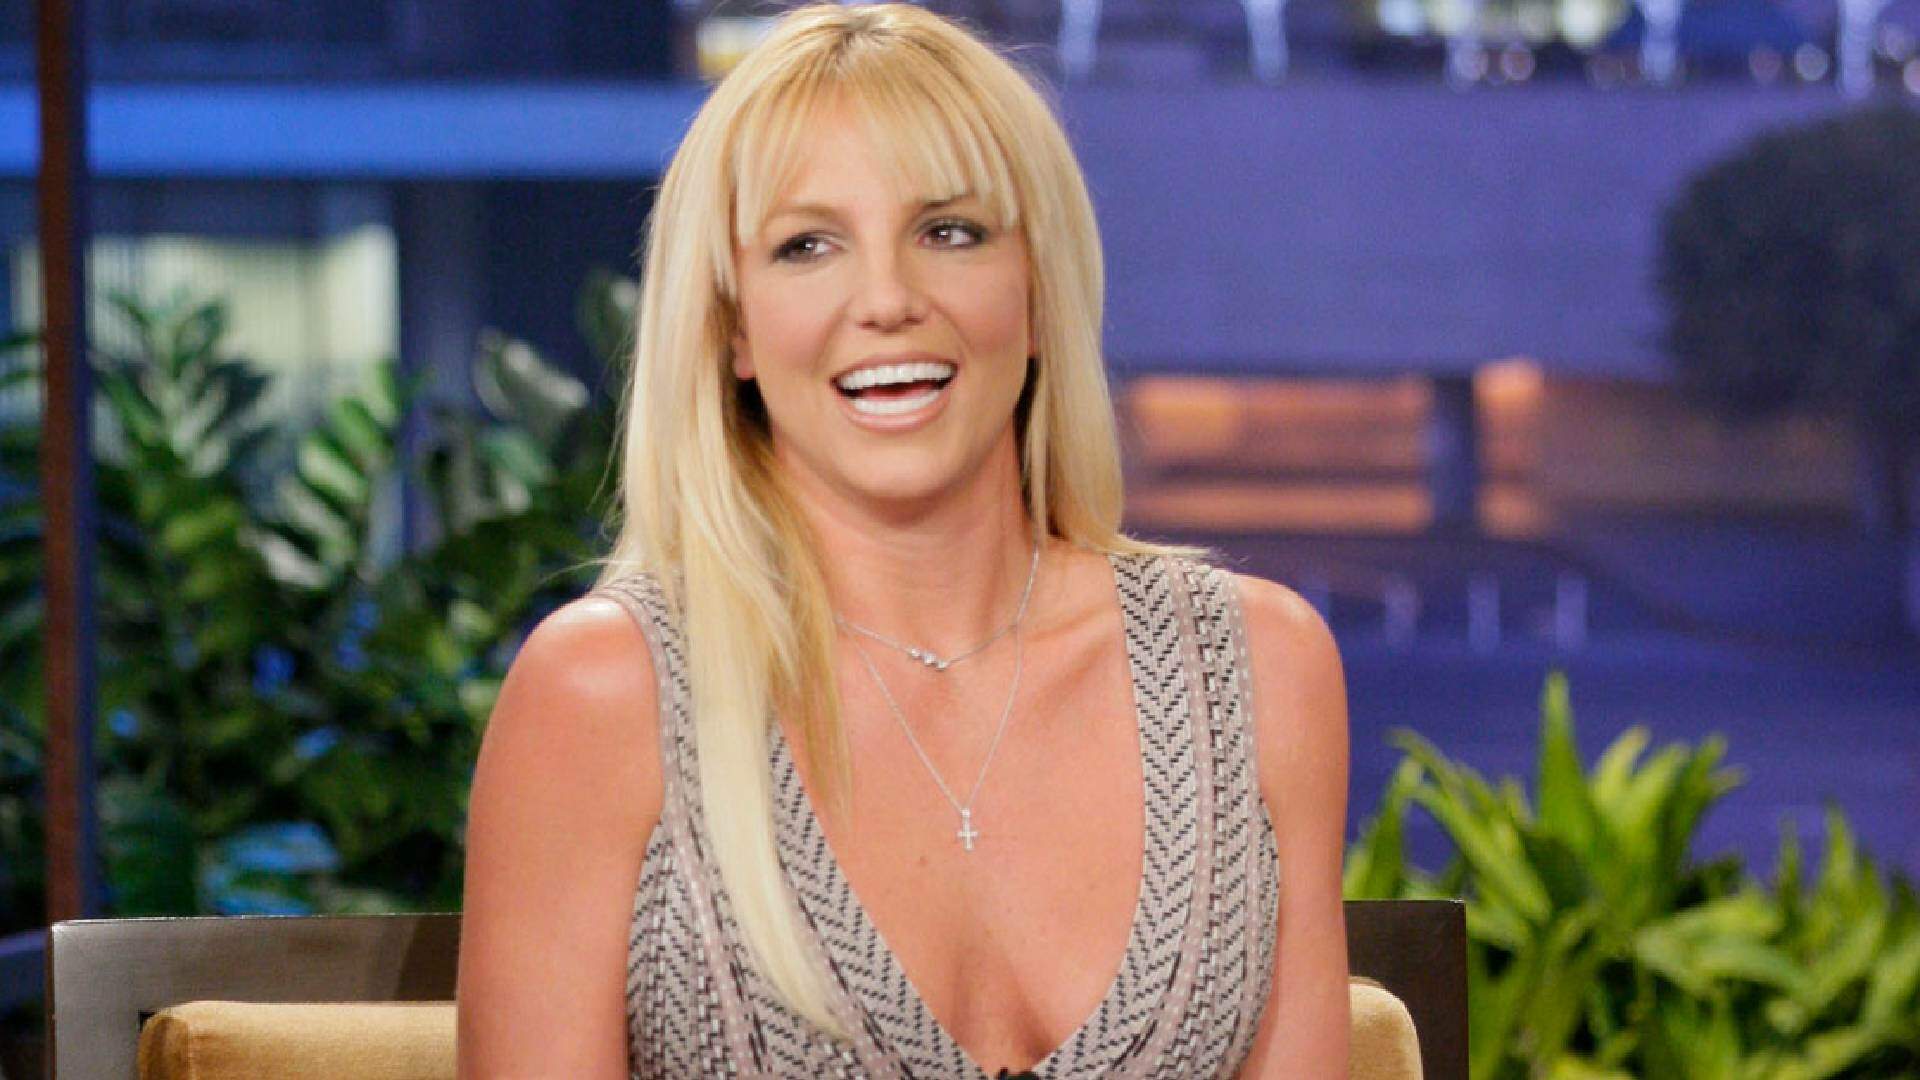 Em vídeo, Britney Spears enaltece importância musical de famoso astro pop: “gênio atemporal” - Metropolitana FM